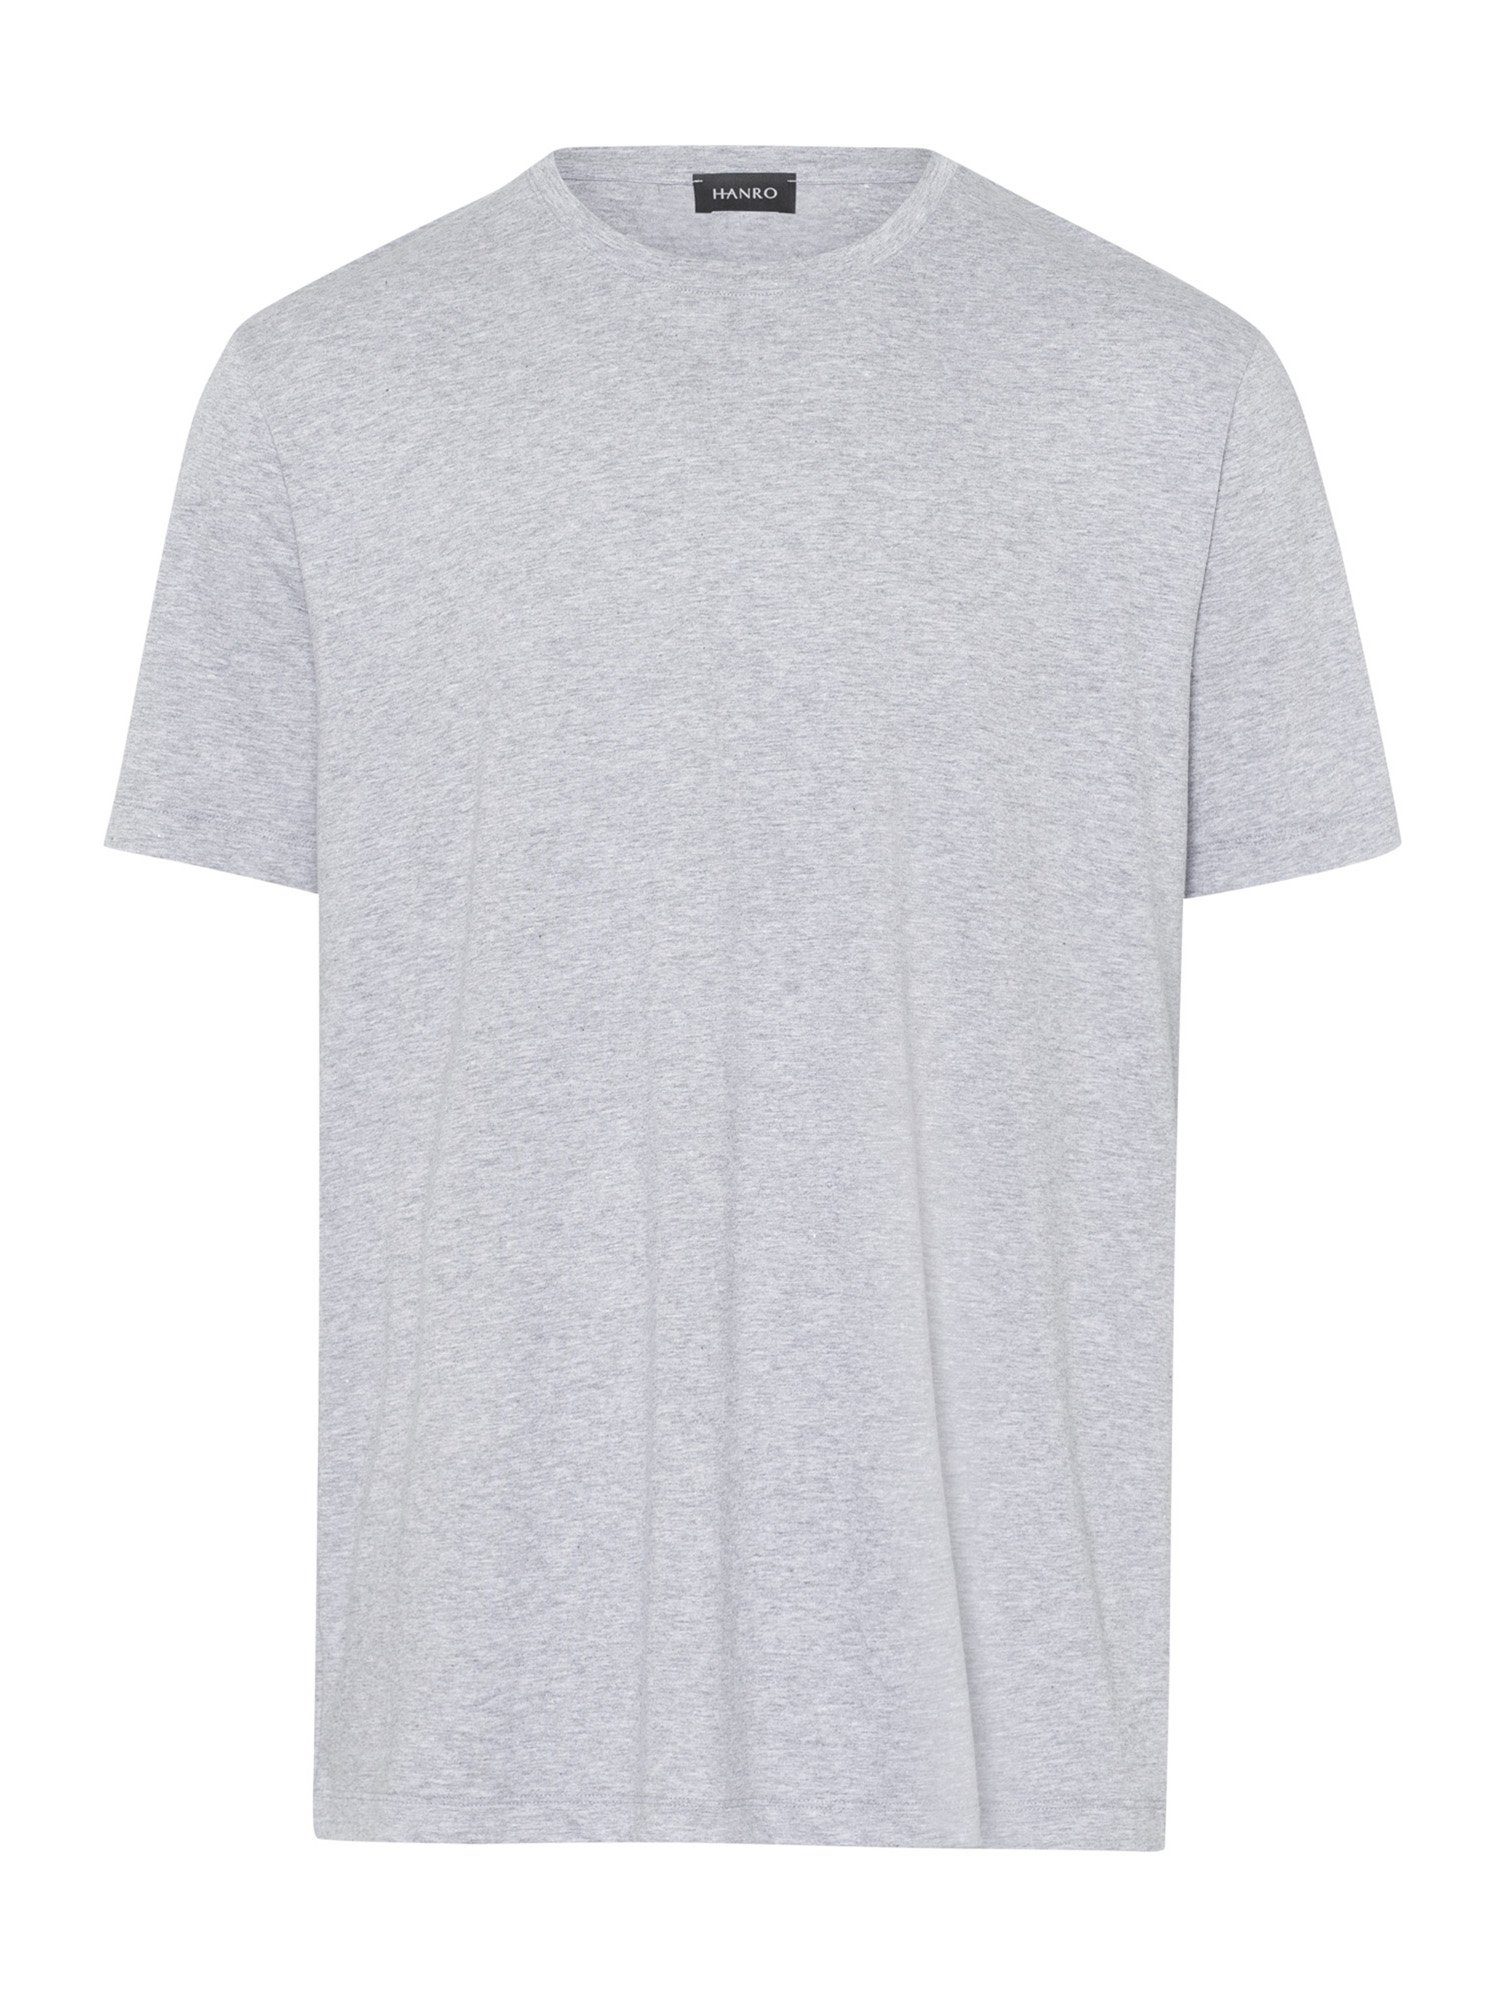 Hanro T-Shirt Night & Day silver melange